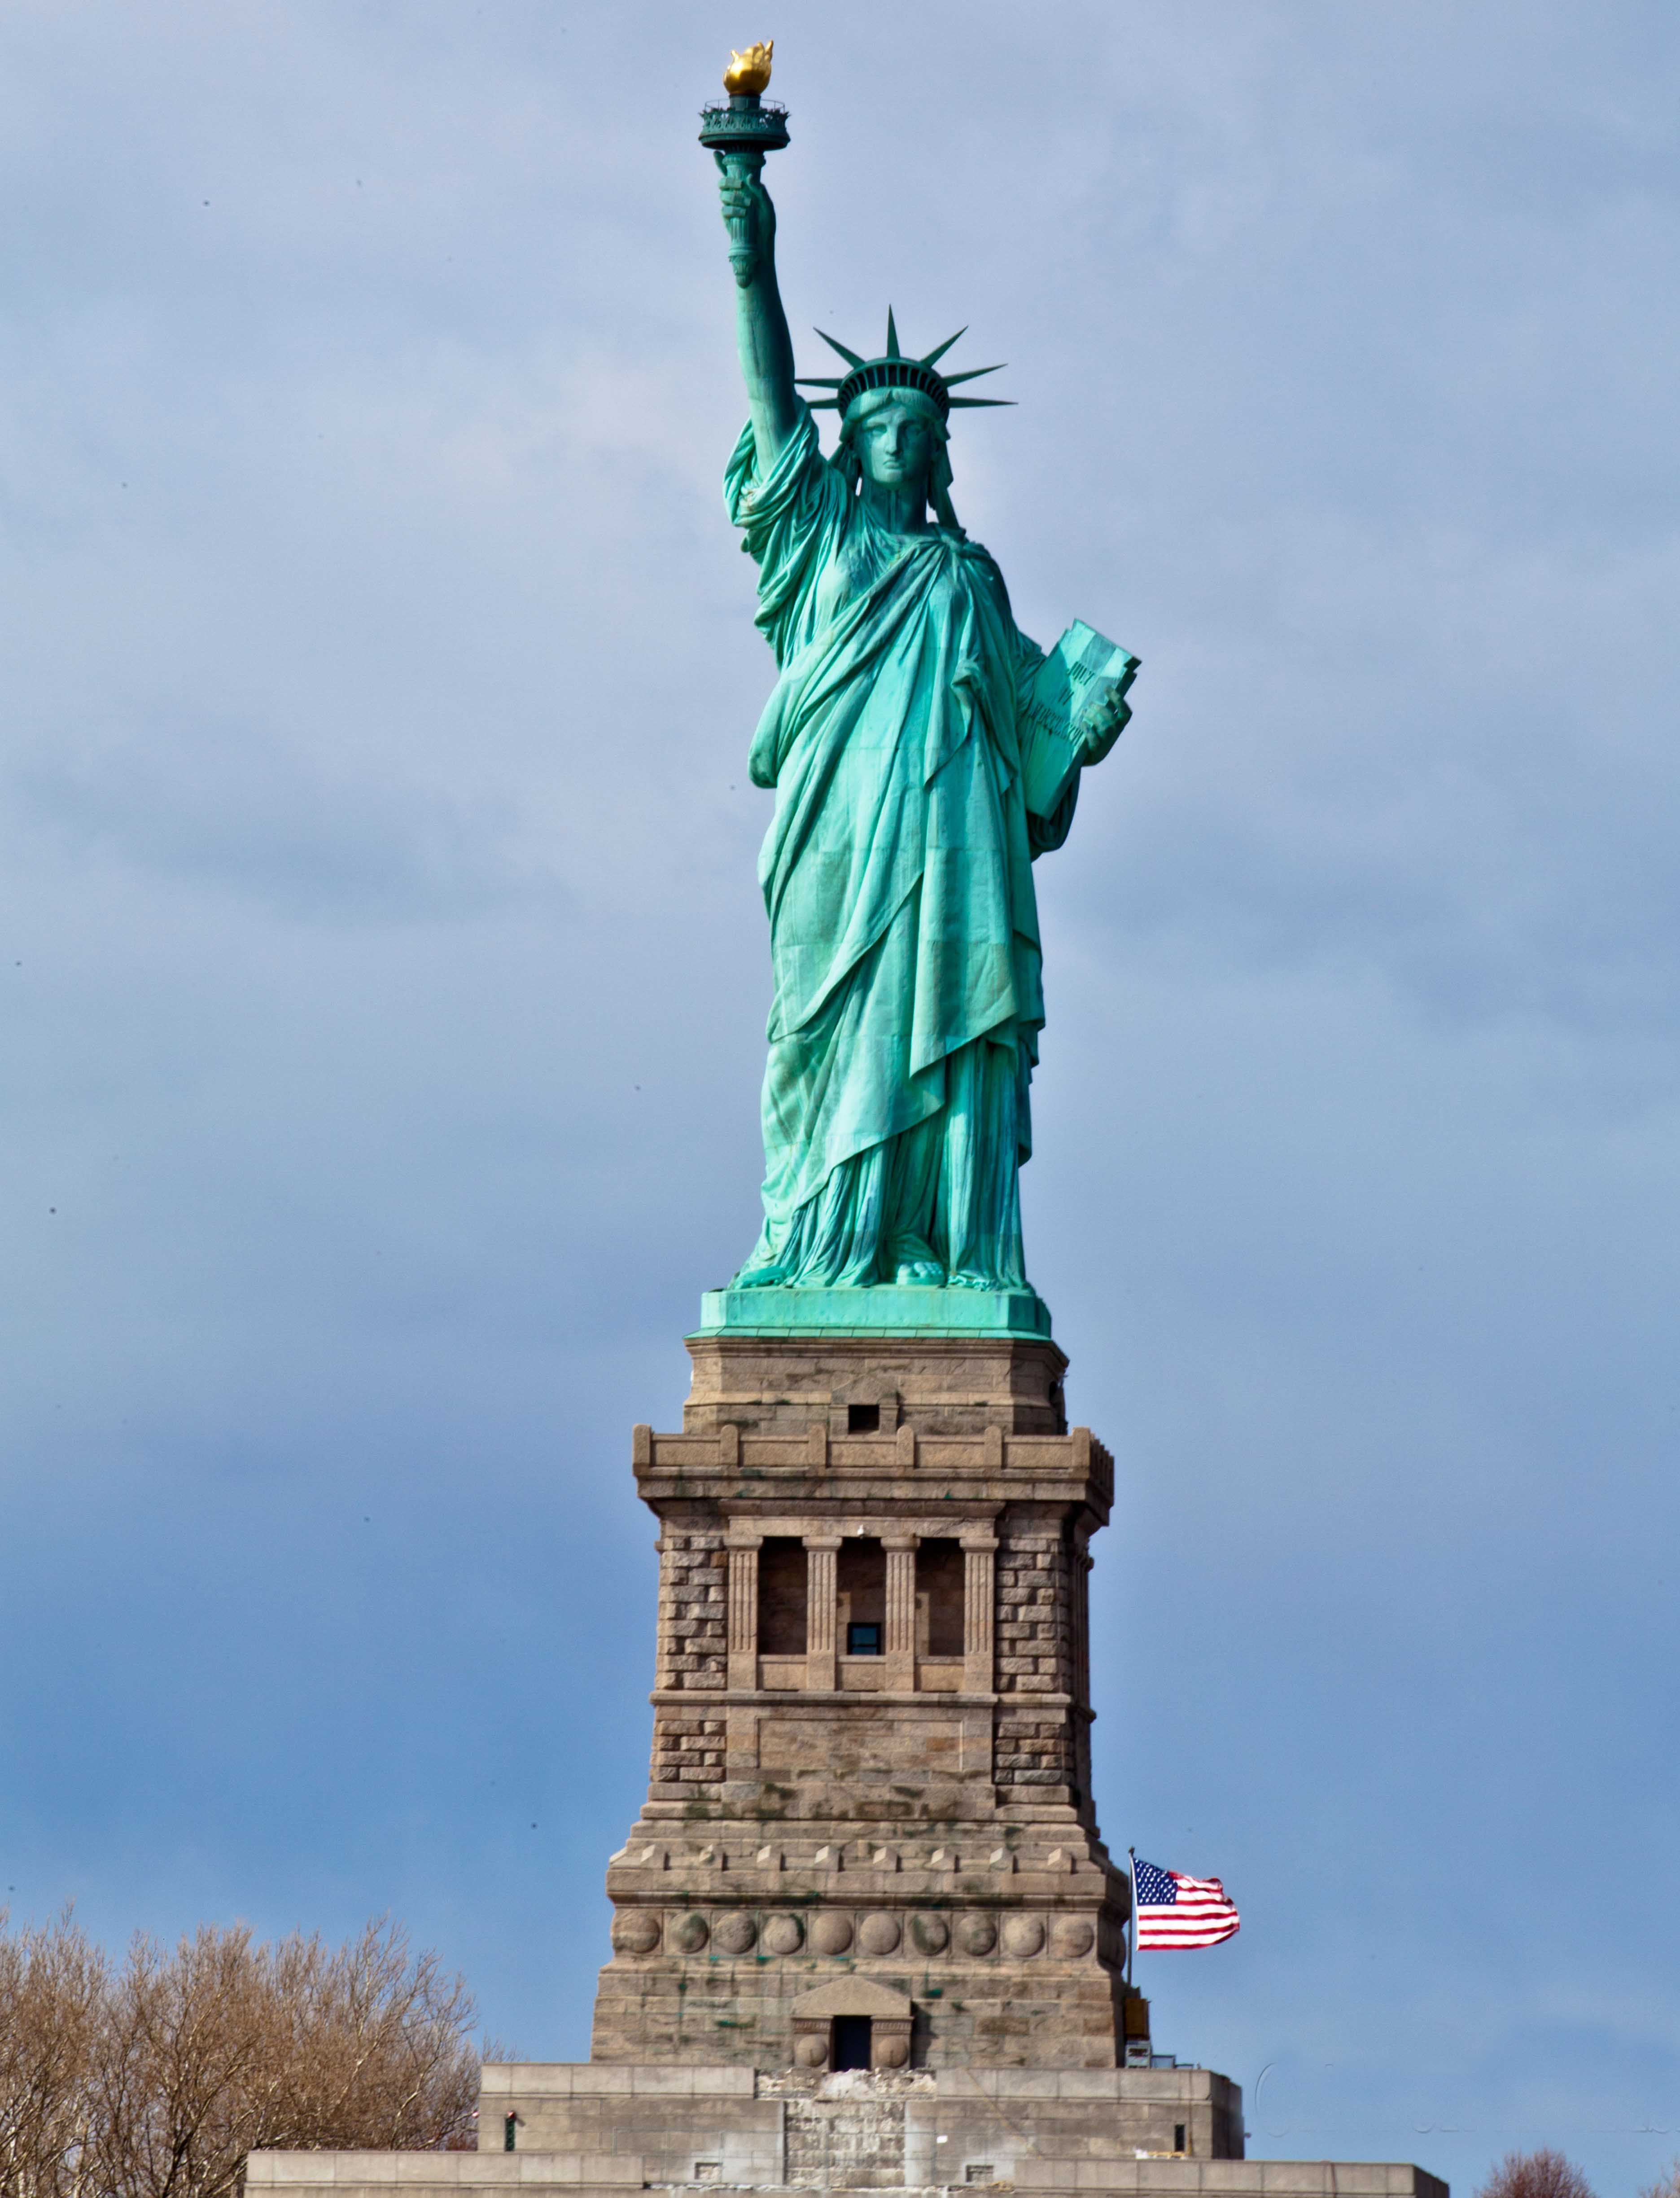 Libery. Америка Нью-Йорк статуя свободы. Статуя свободы (Statue of Liberty).. Остров Либерти со статуей свободы.